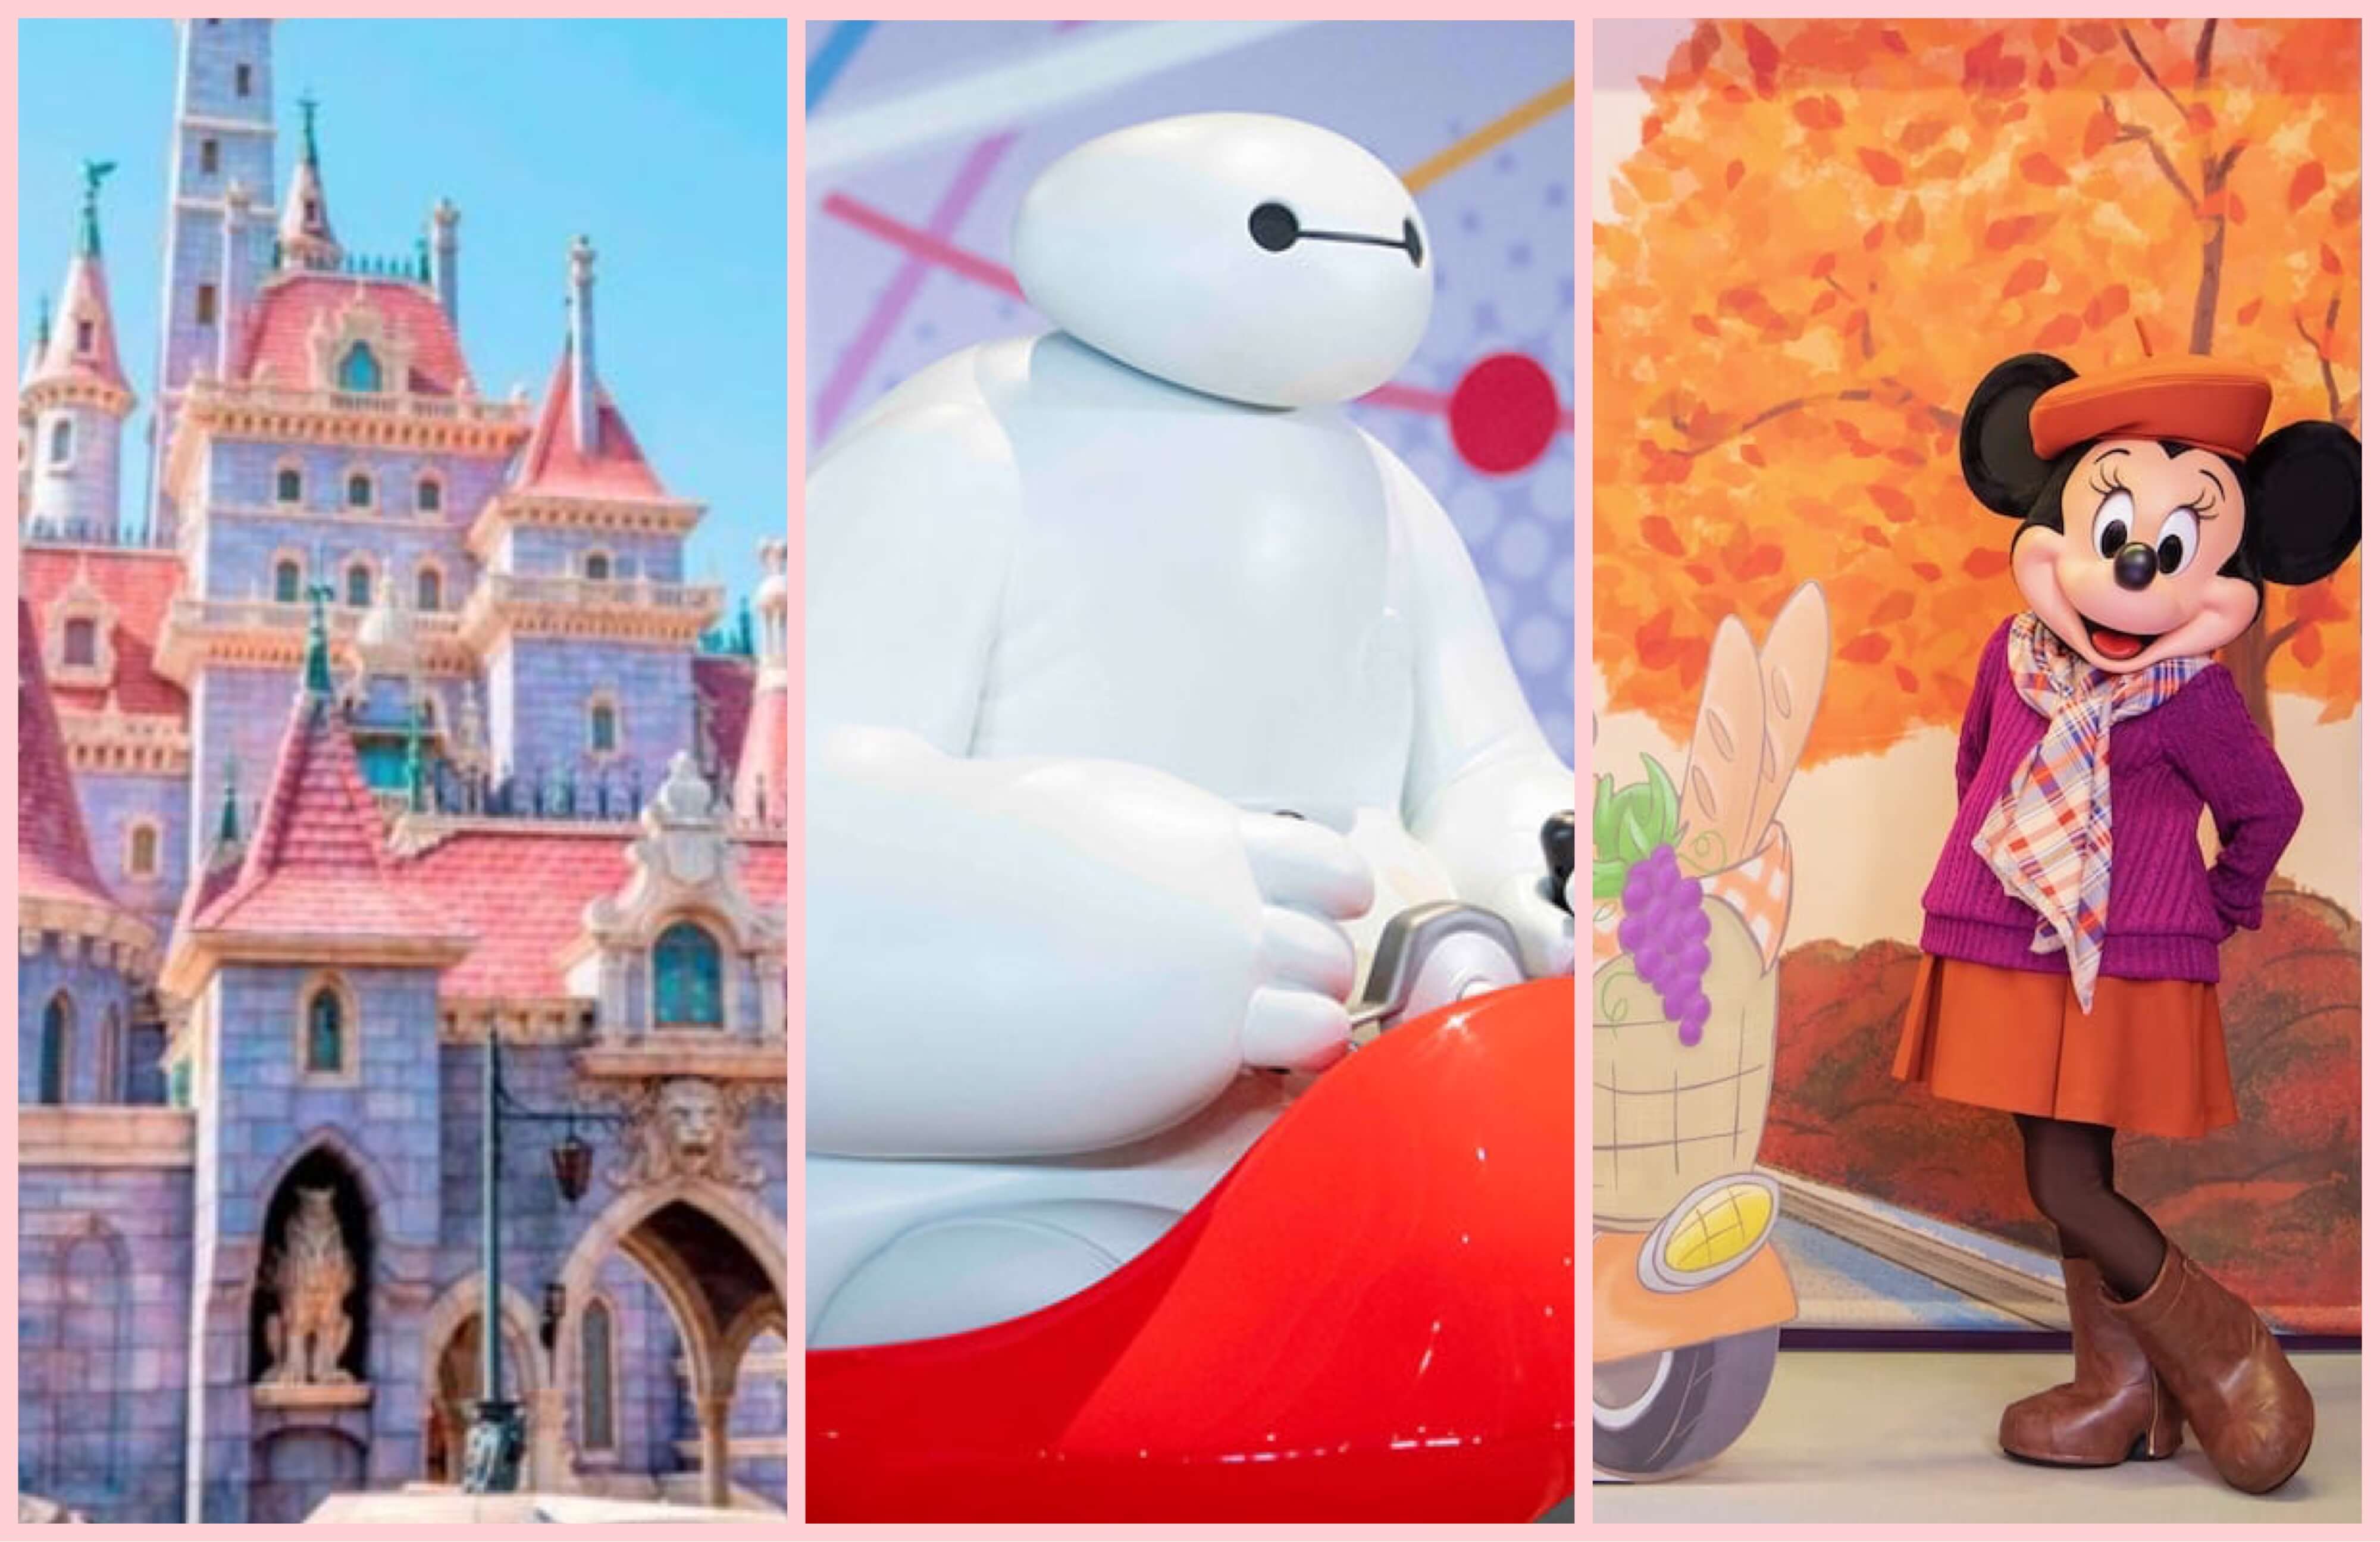 Huge Tokyo Disneyland Expansion Opens This Monday